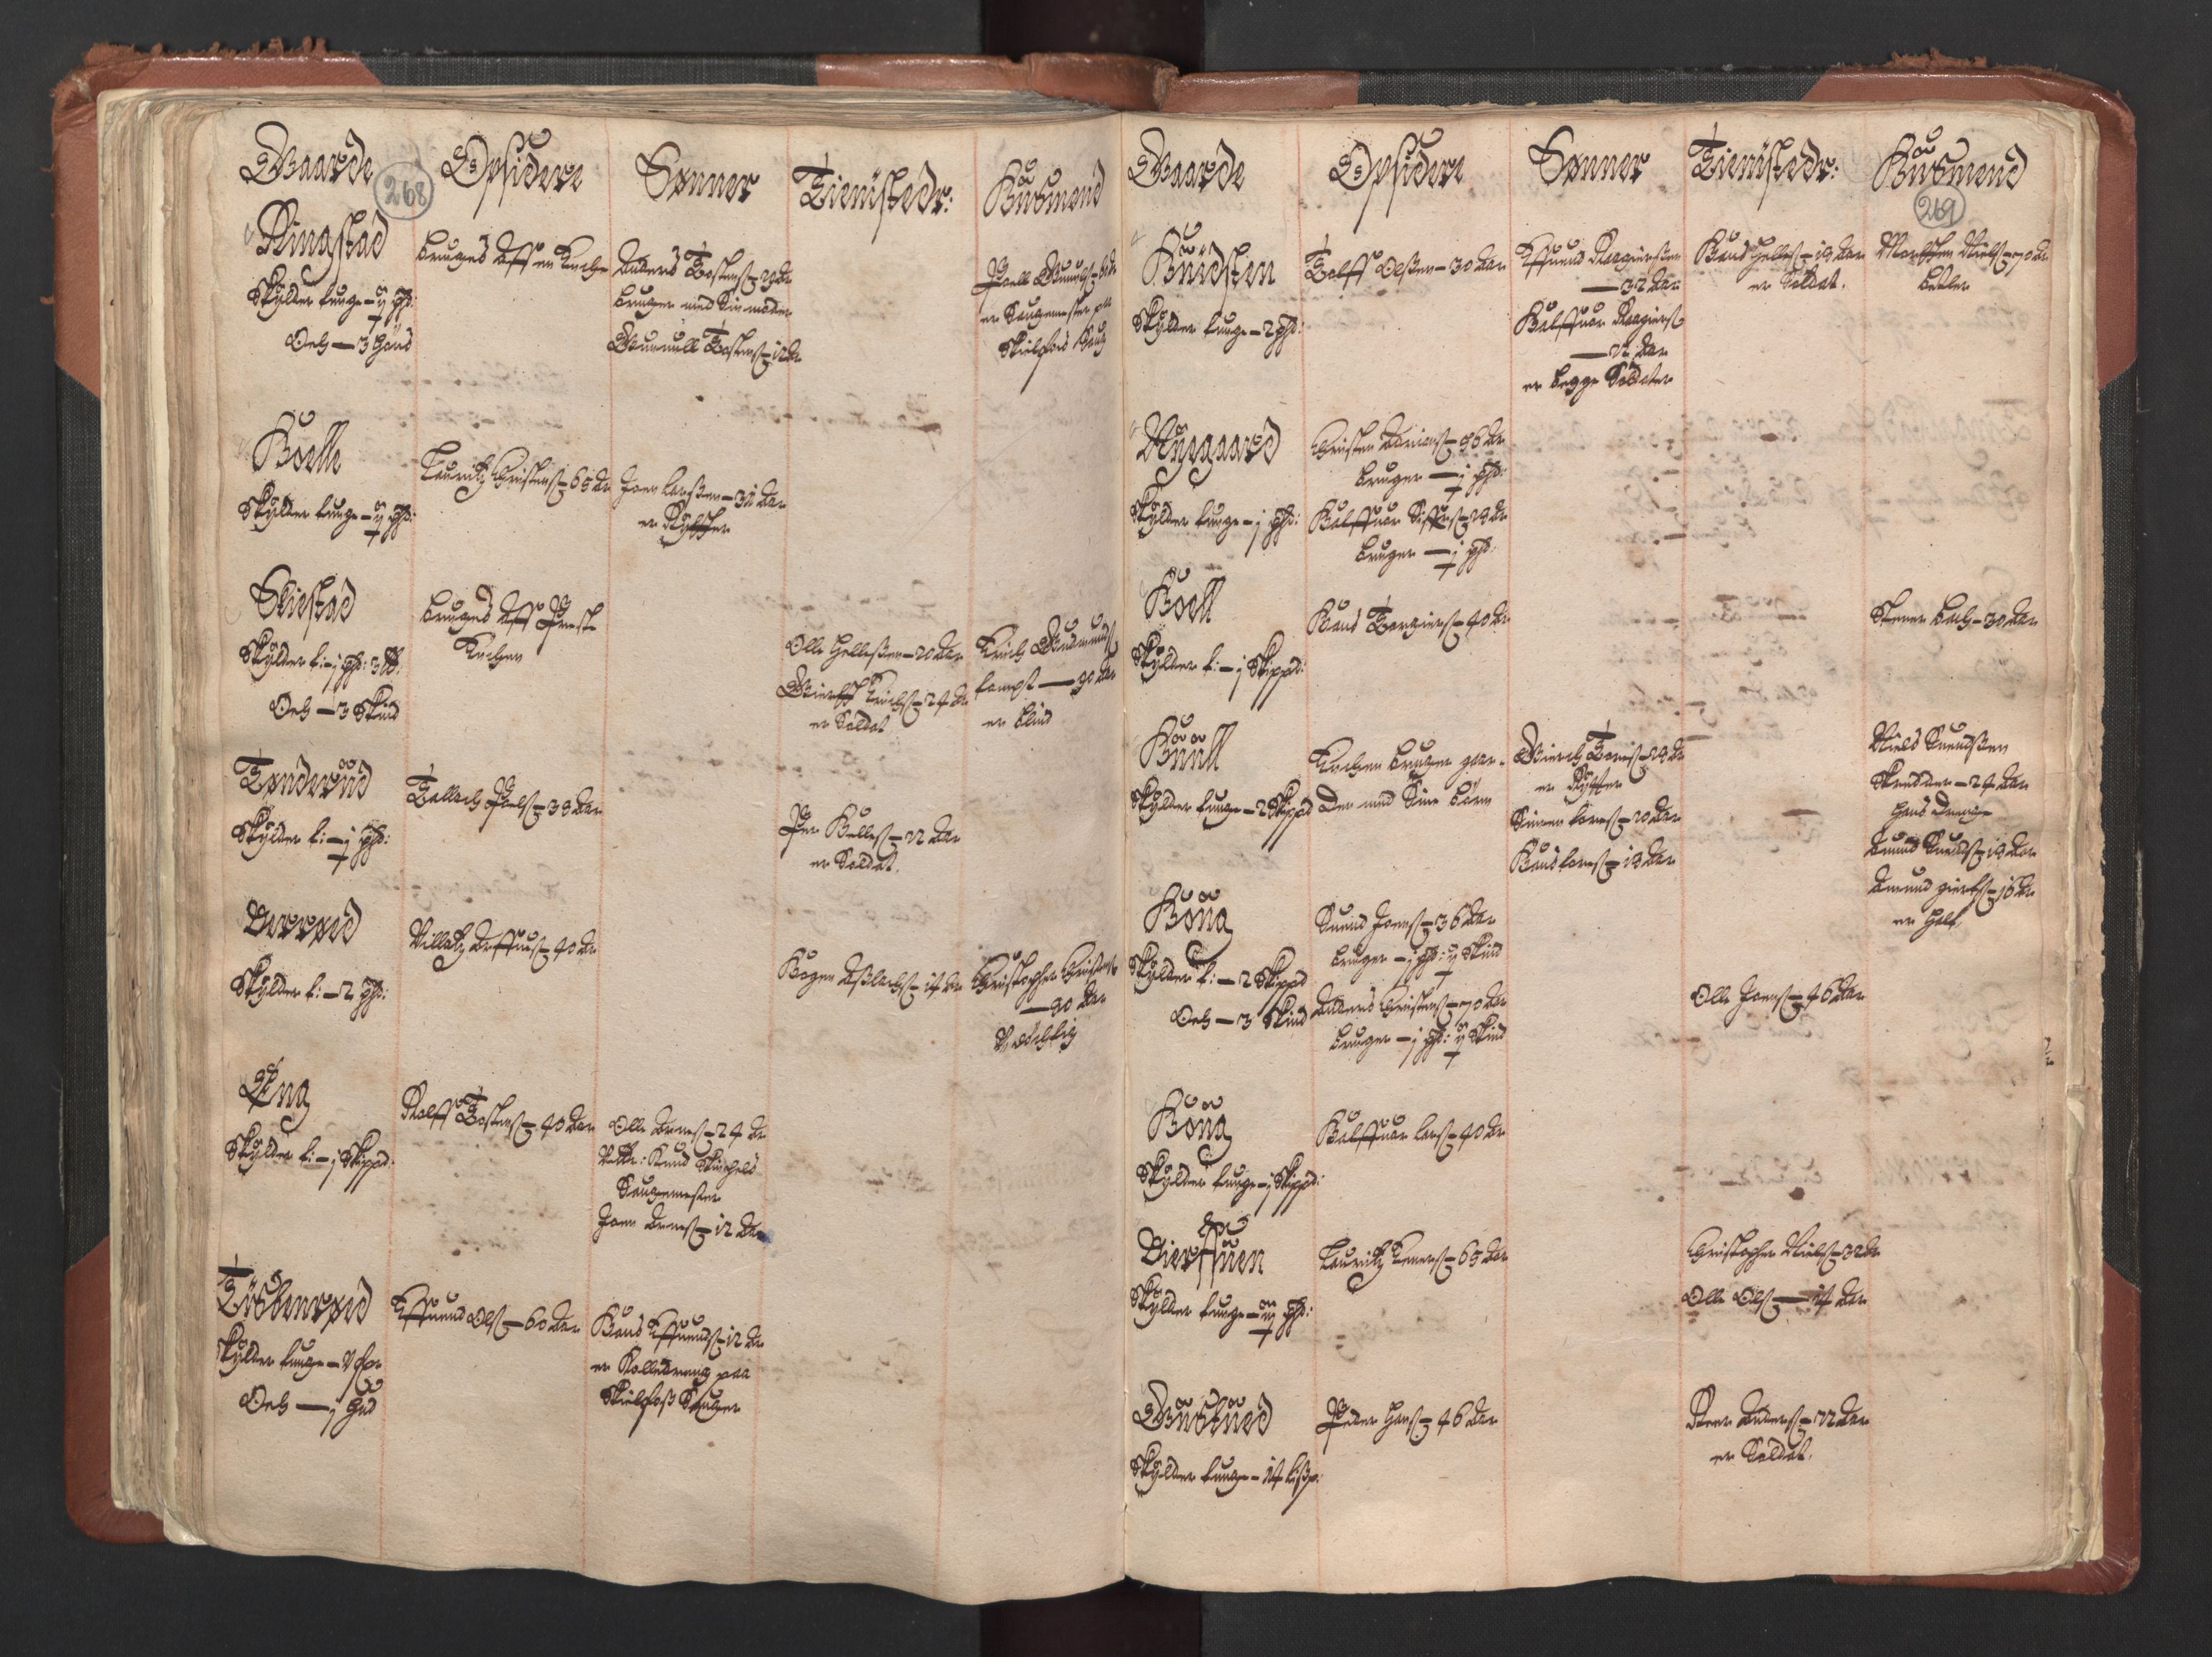 RA, Fogdenes og sorenskrivernes manntall 1664-1666, nr. 1: Fogderier (len og skipreider) i nåværende Østfold fylke, 1664, s. 268-269